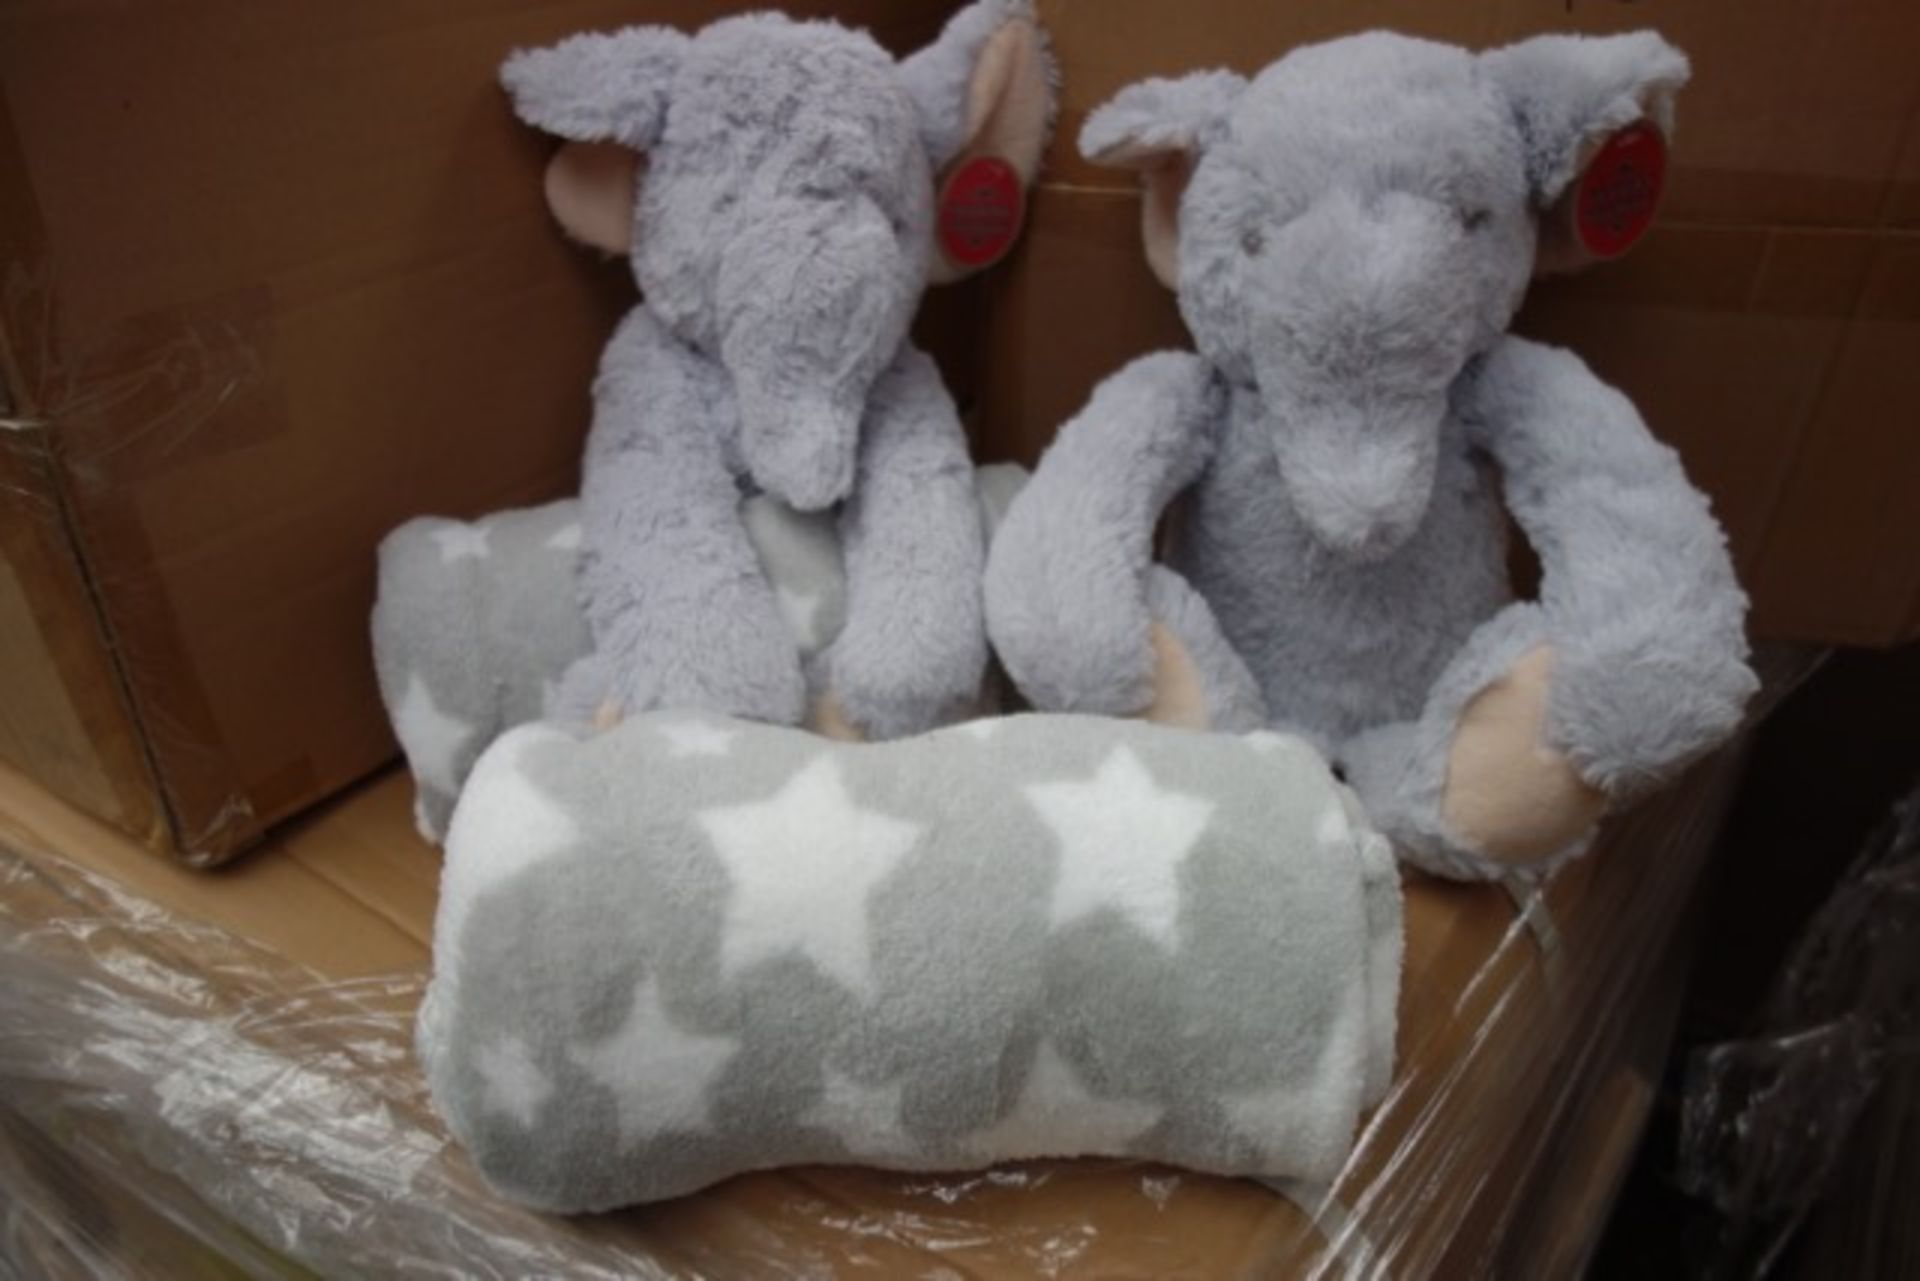 12 x Brand New Global Gizmos Elephant Teddy Bear with Detatchable Blankets. RRP £19.99 each,